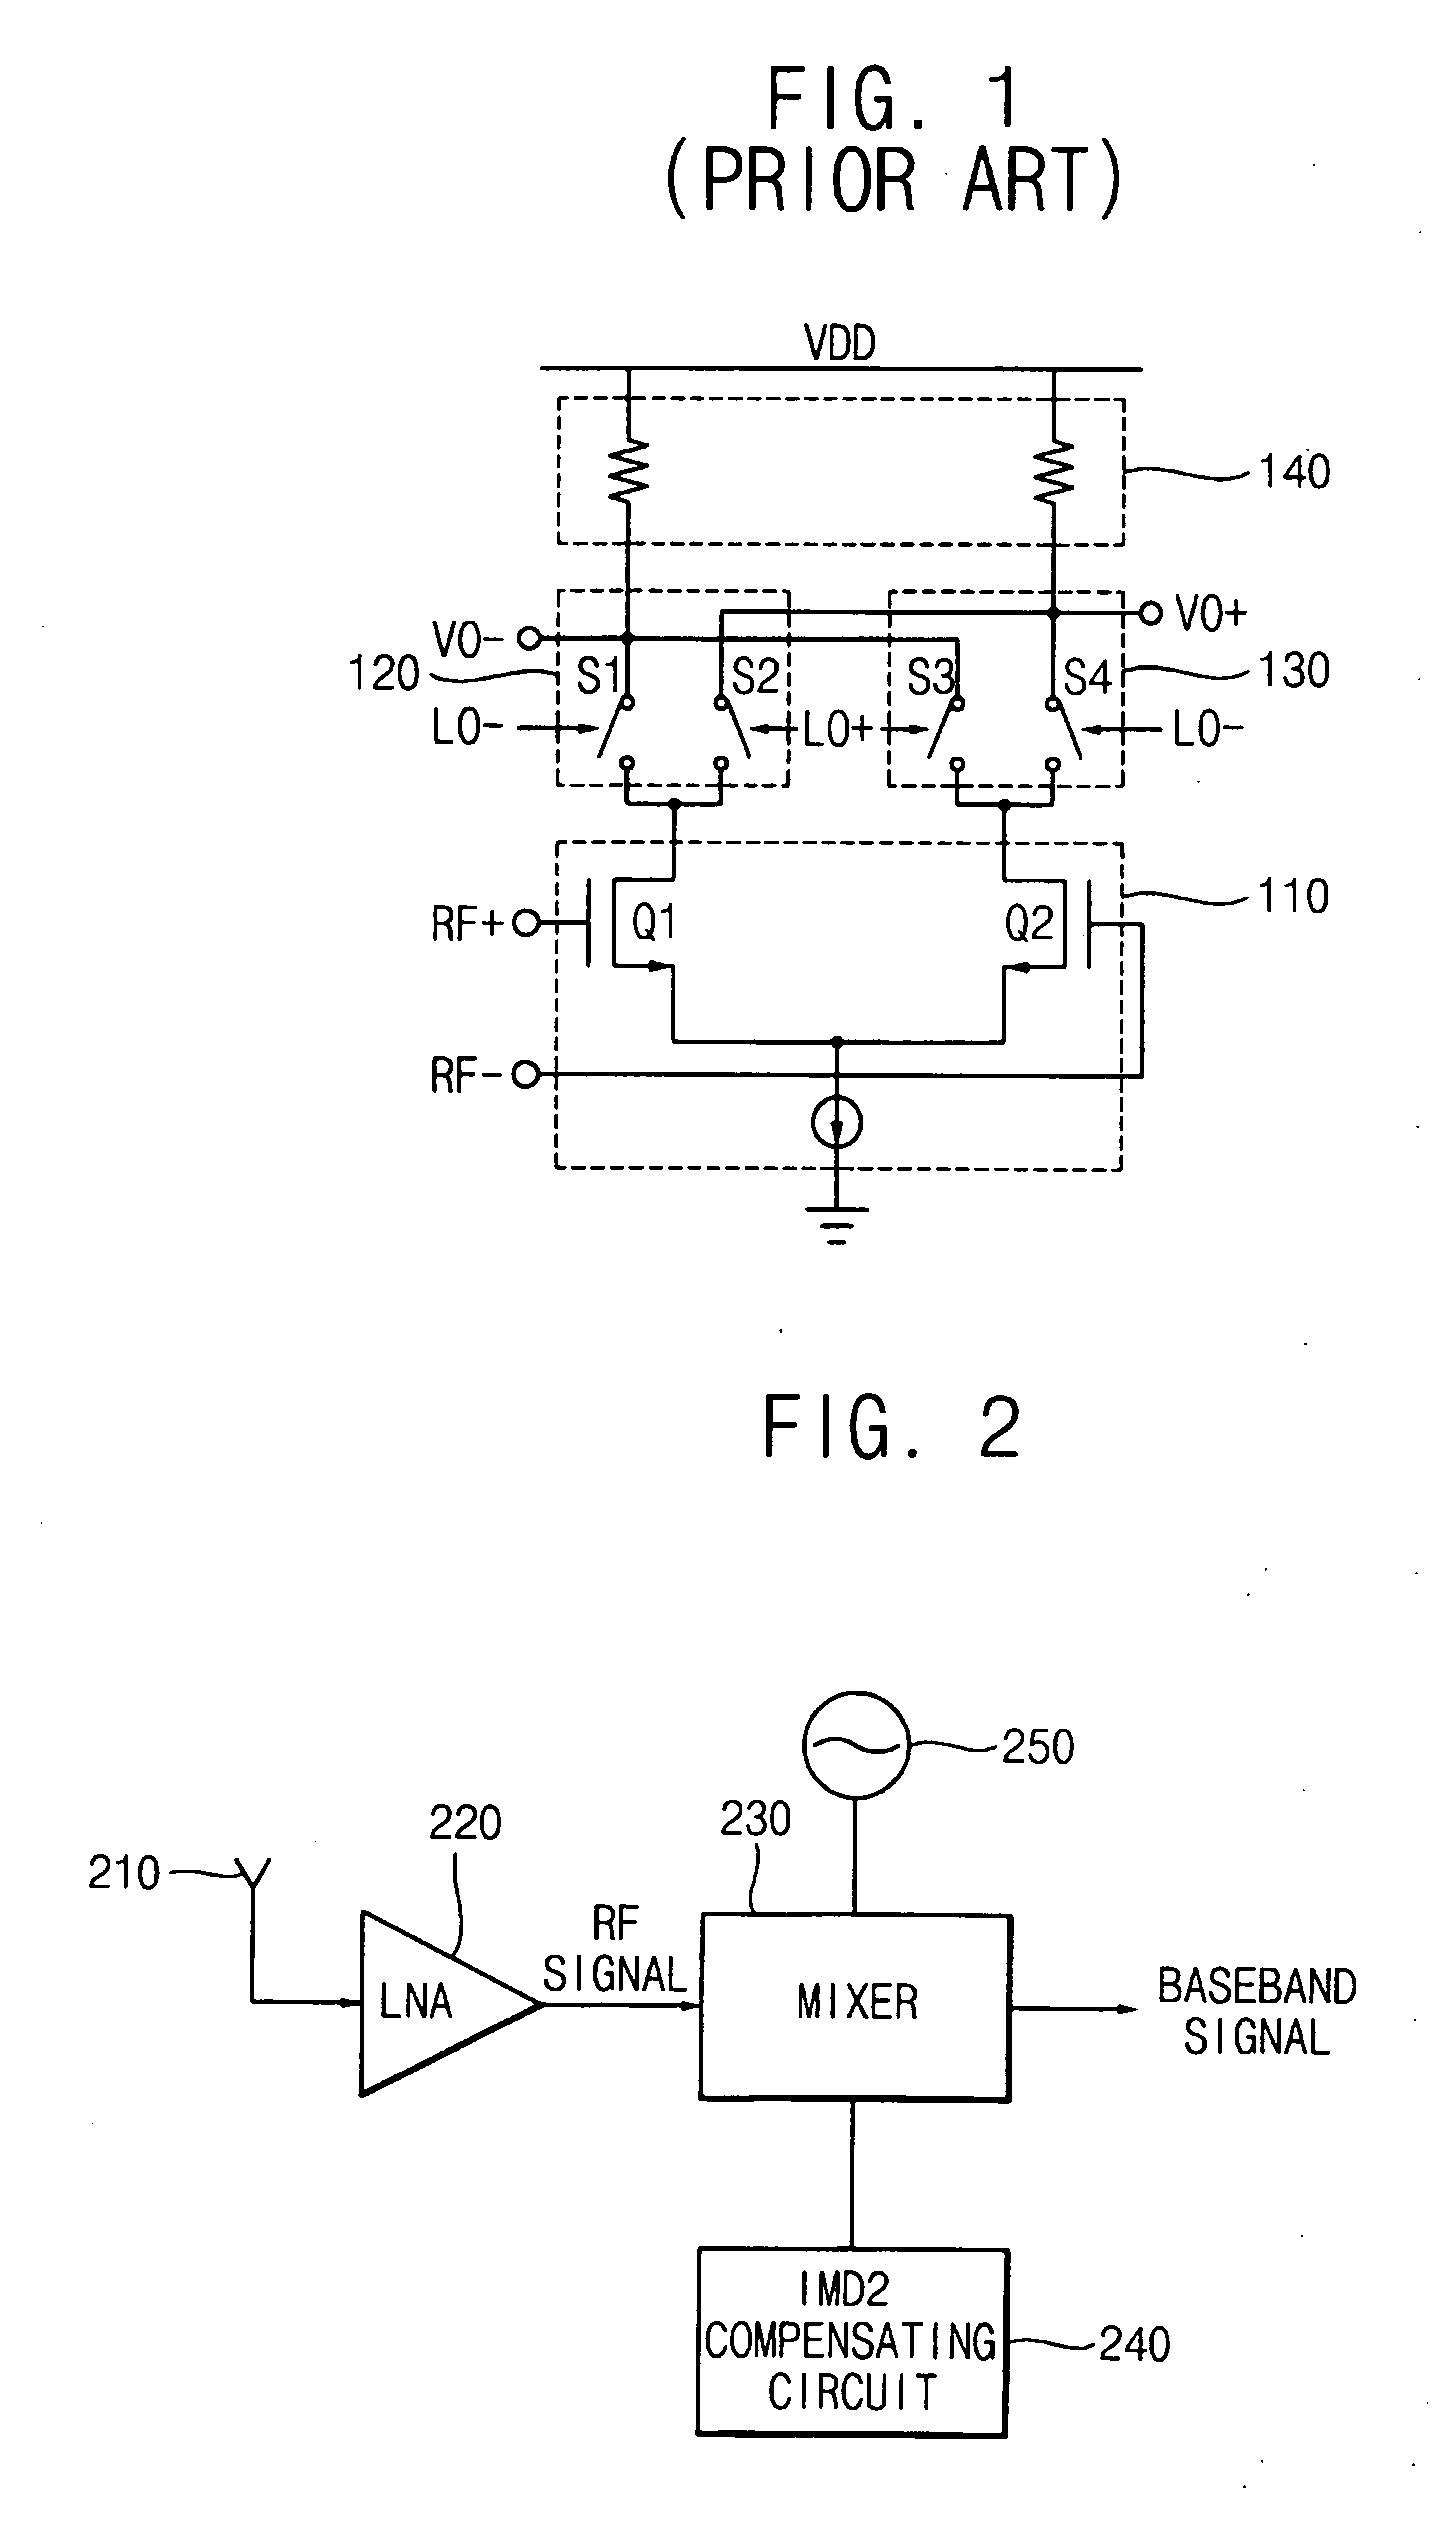 Second-order intermodulation distortion compensating circuit